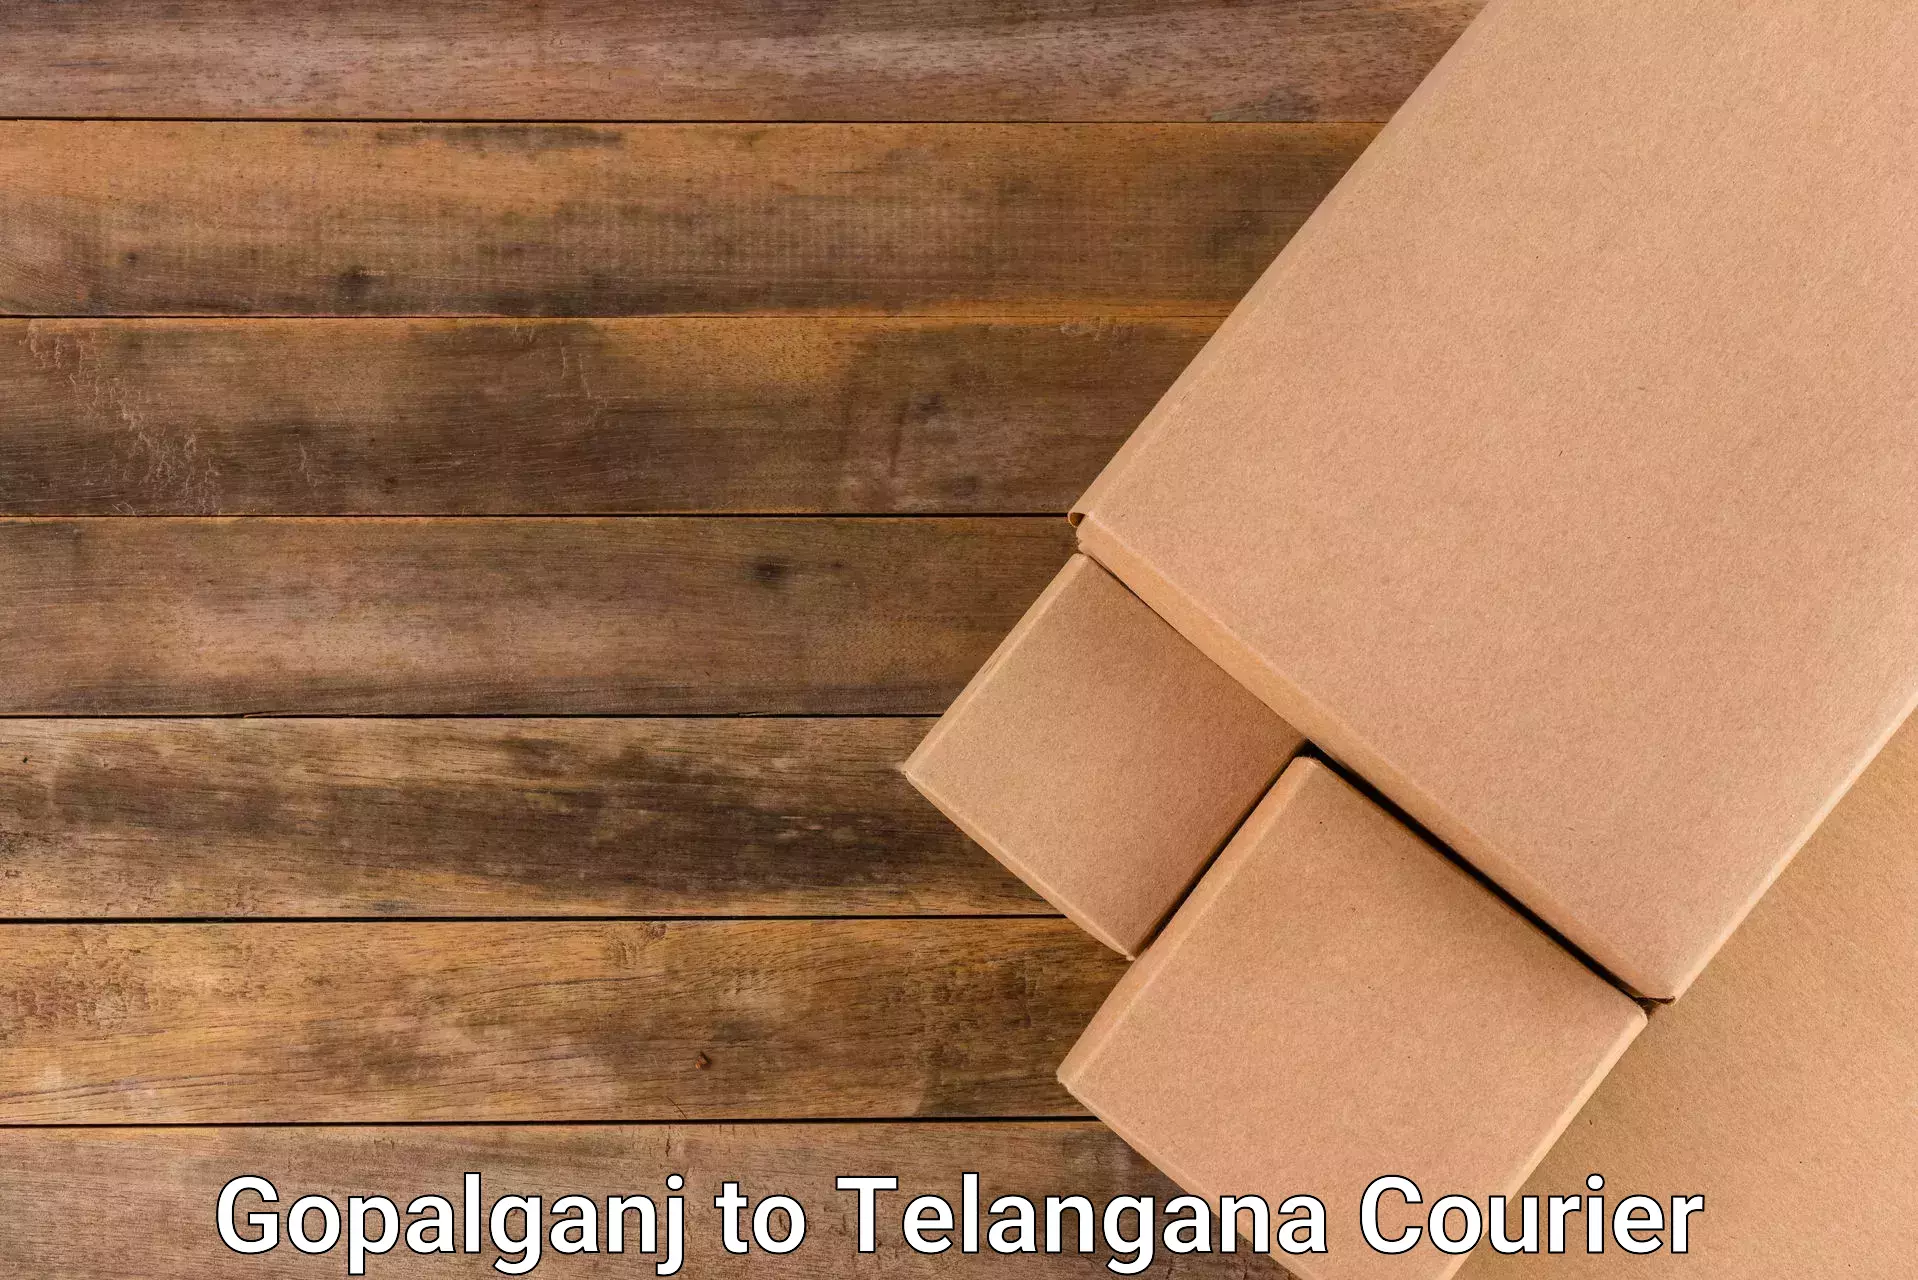 Express package handling Gopalganj to Tadoor